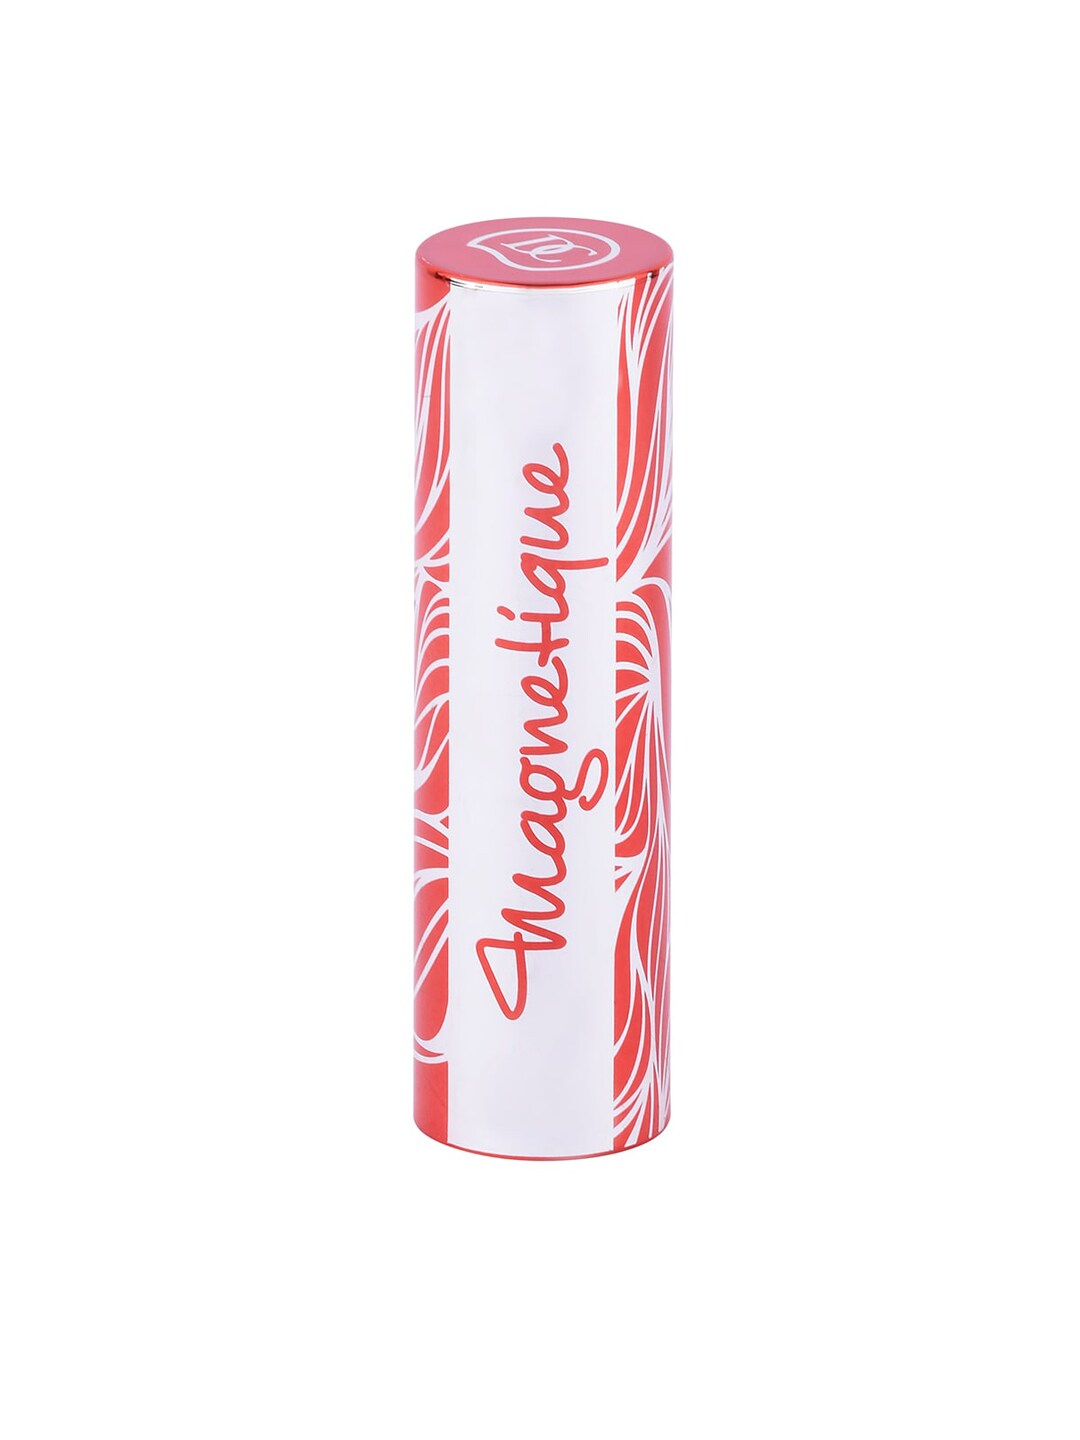 Dermacol 2188 Magnetique Lipstick No.4 4.4g Price in India